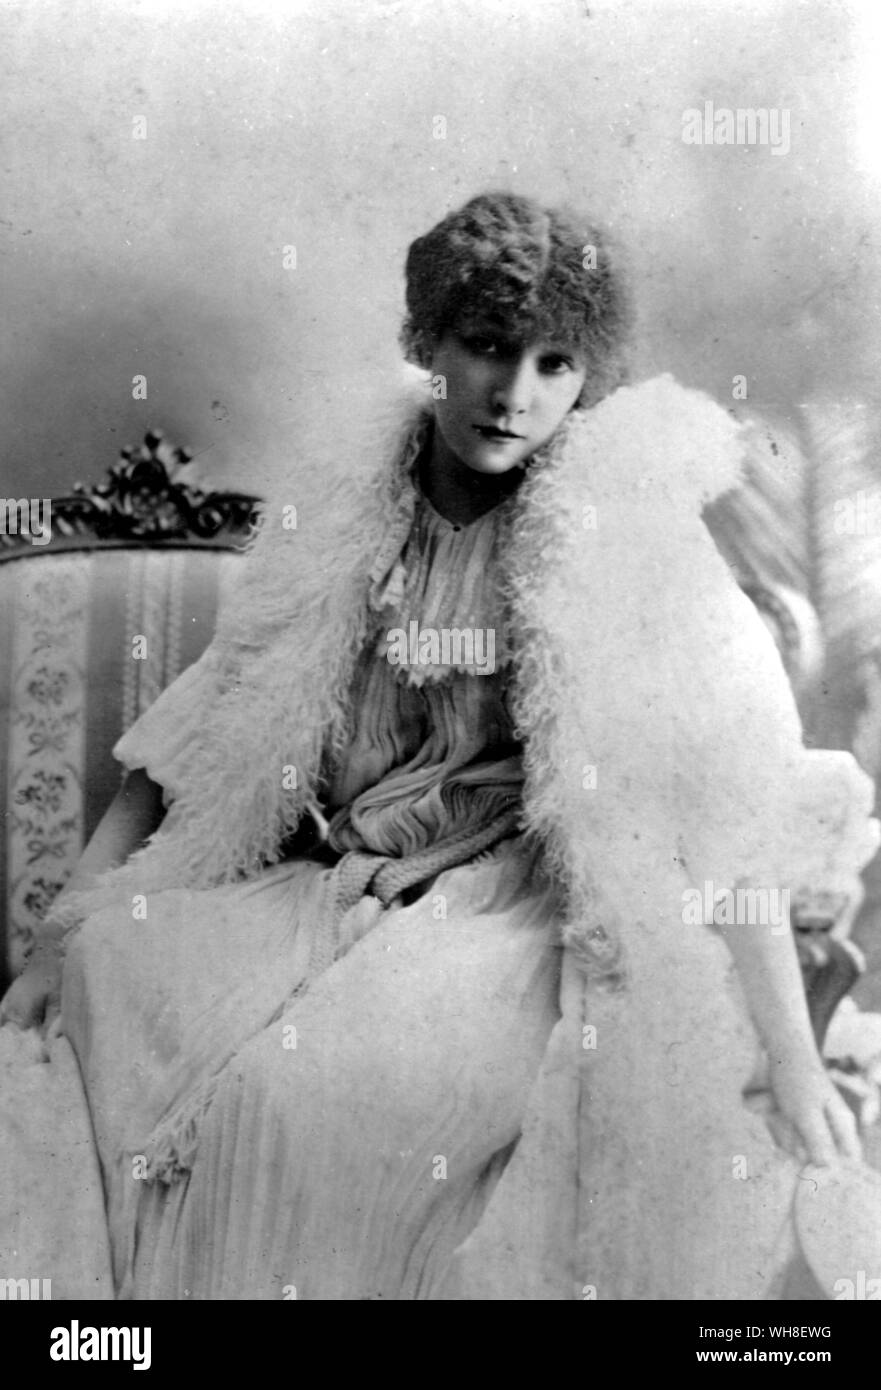 Sarah Bernhardt 1899, fase di nome di Henriette Rosine Bernard, (1844 -1923). L'attrice francese. Bernhardt è stato anche uno dei pionieri del cinema muto attrici. Foto Stock